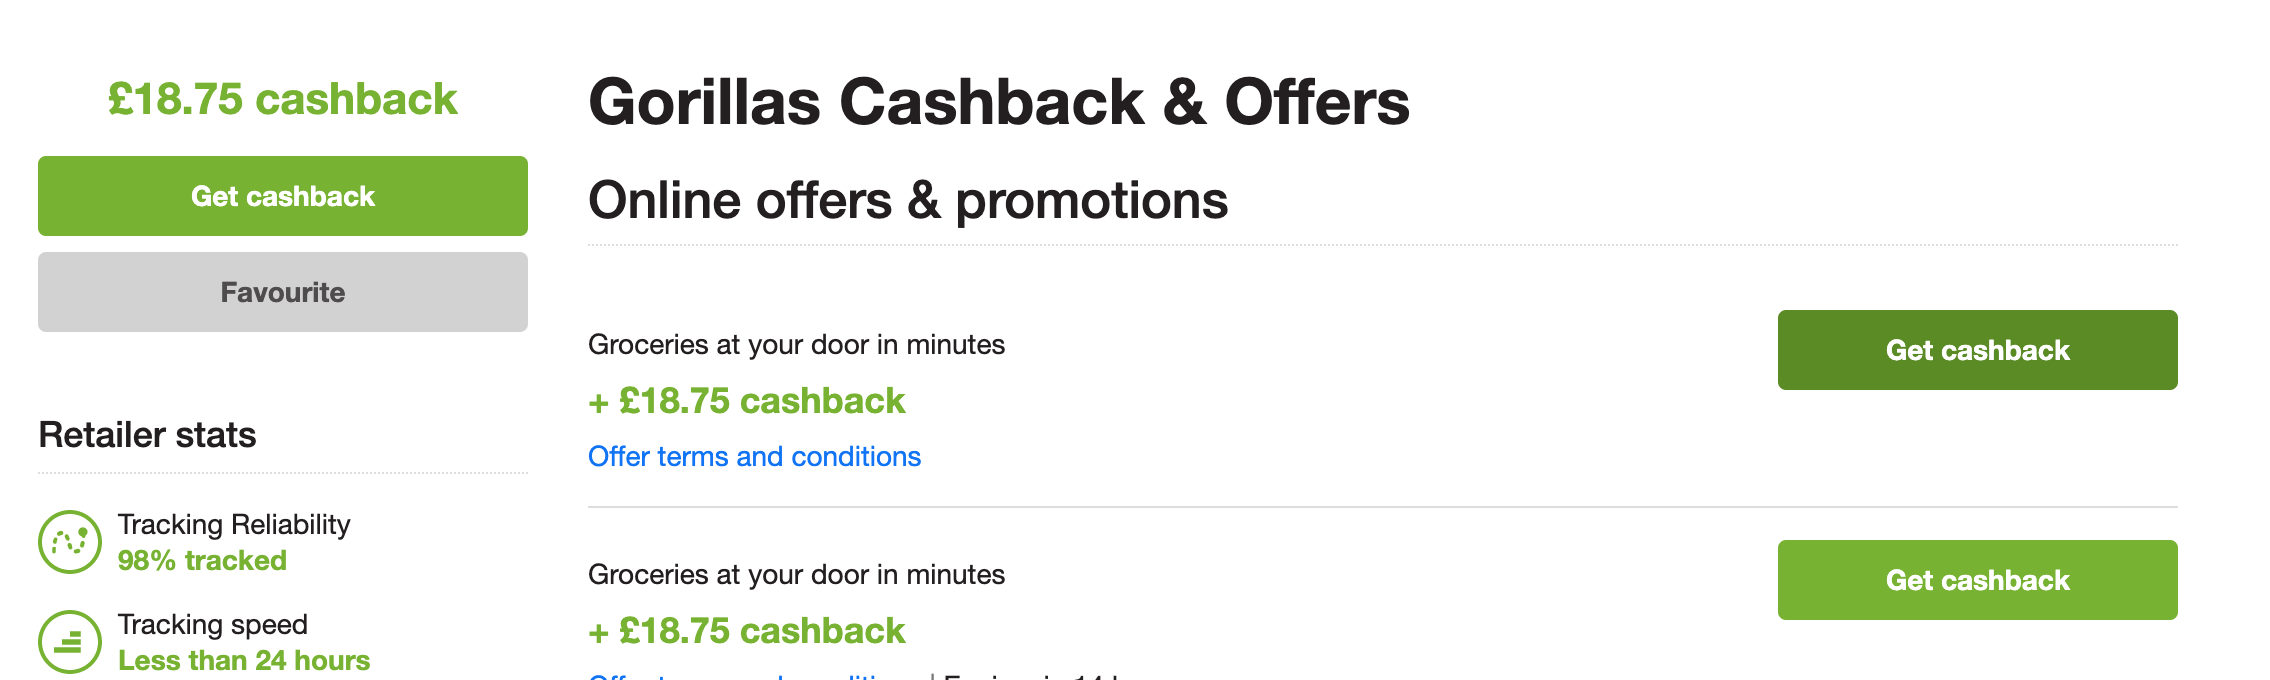 Gorillas cashback discount with Quidco